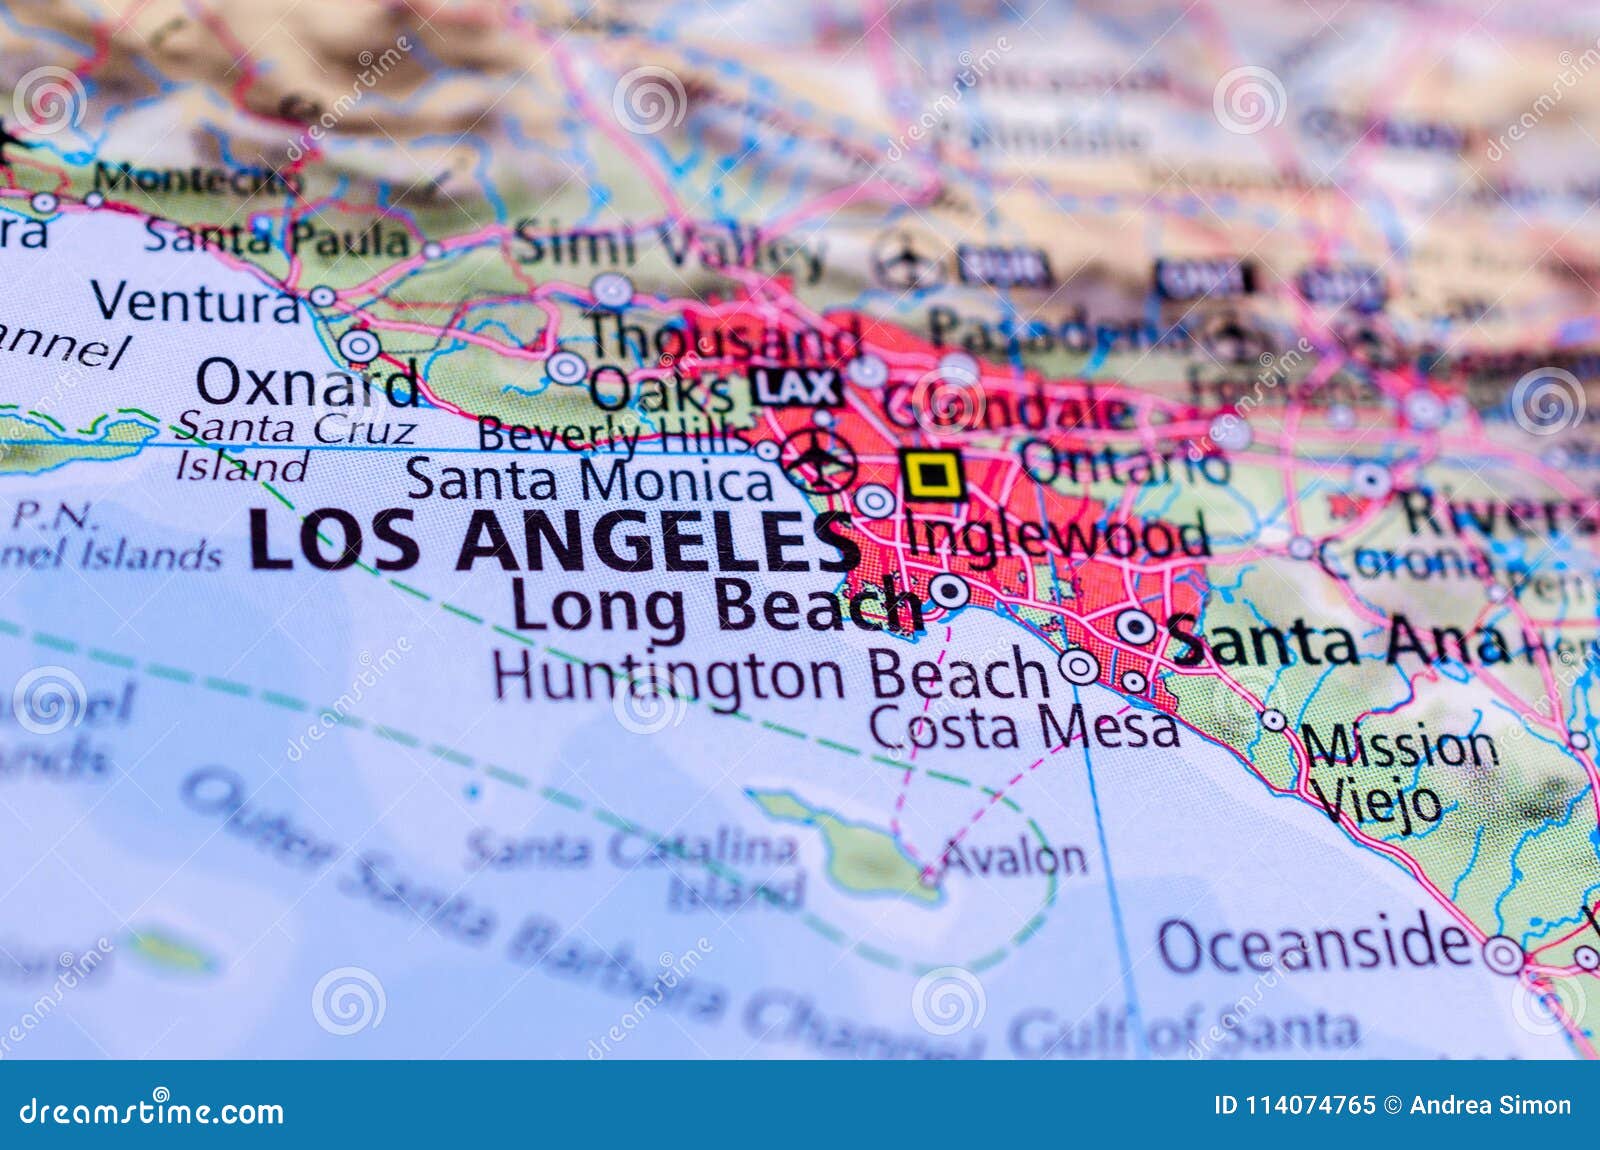 roem Glad Verbeteren Los Angeles op kaart stock afbeelding. Image of kaarten - 114074765